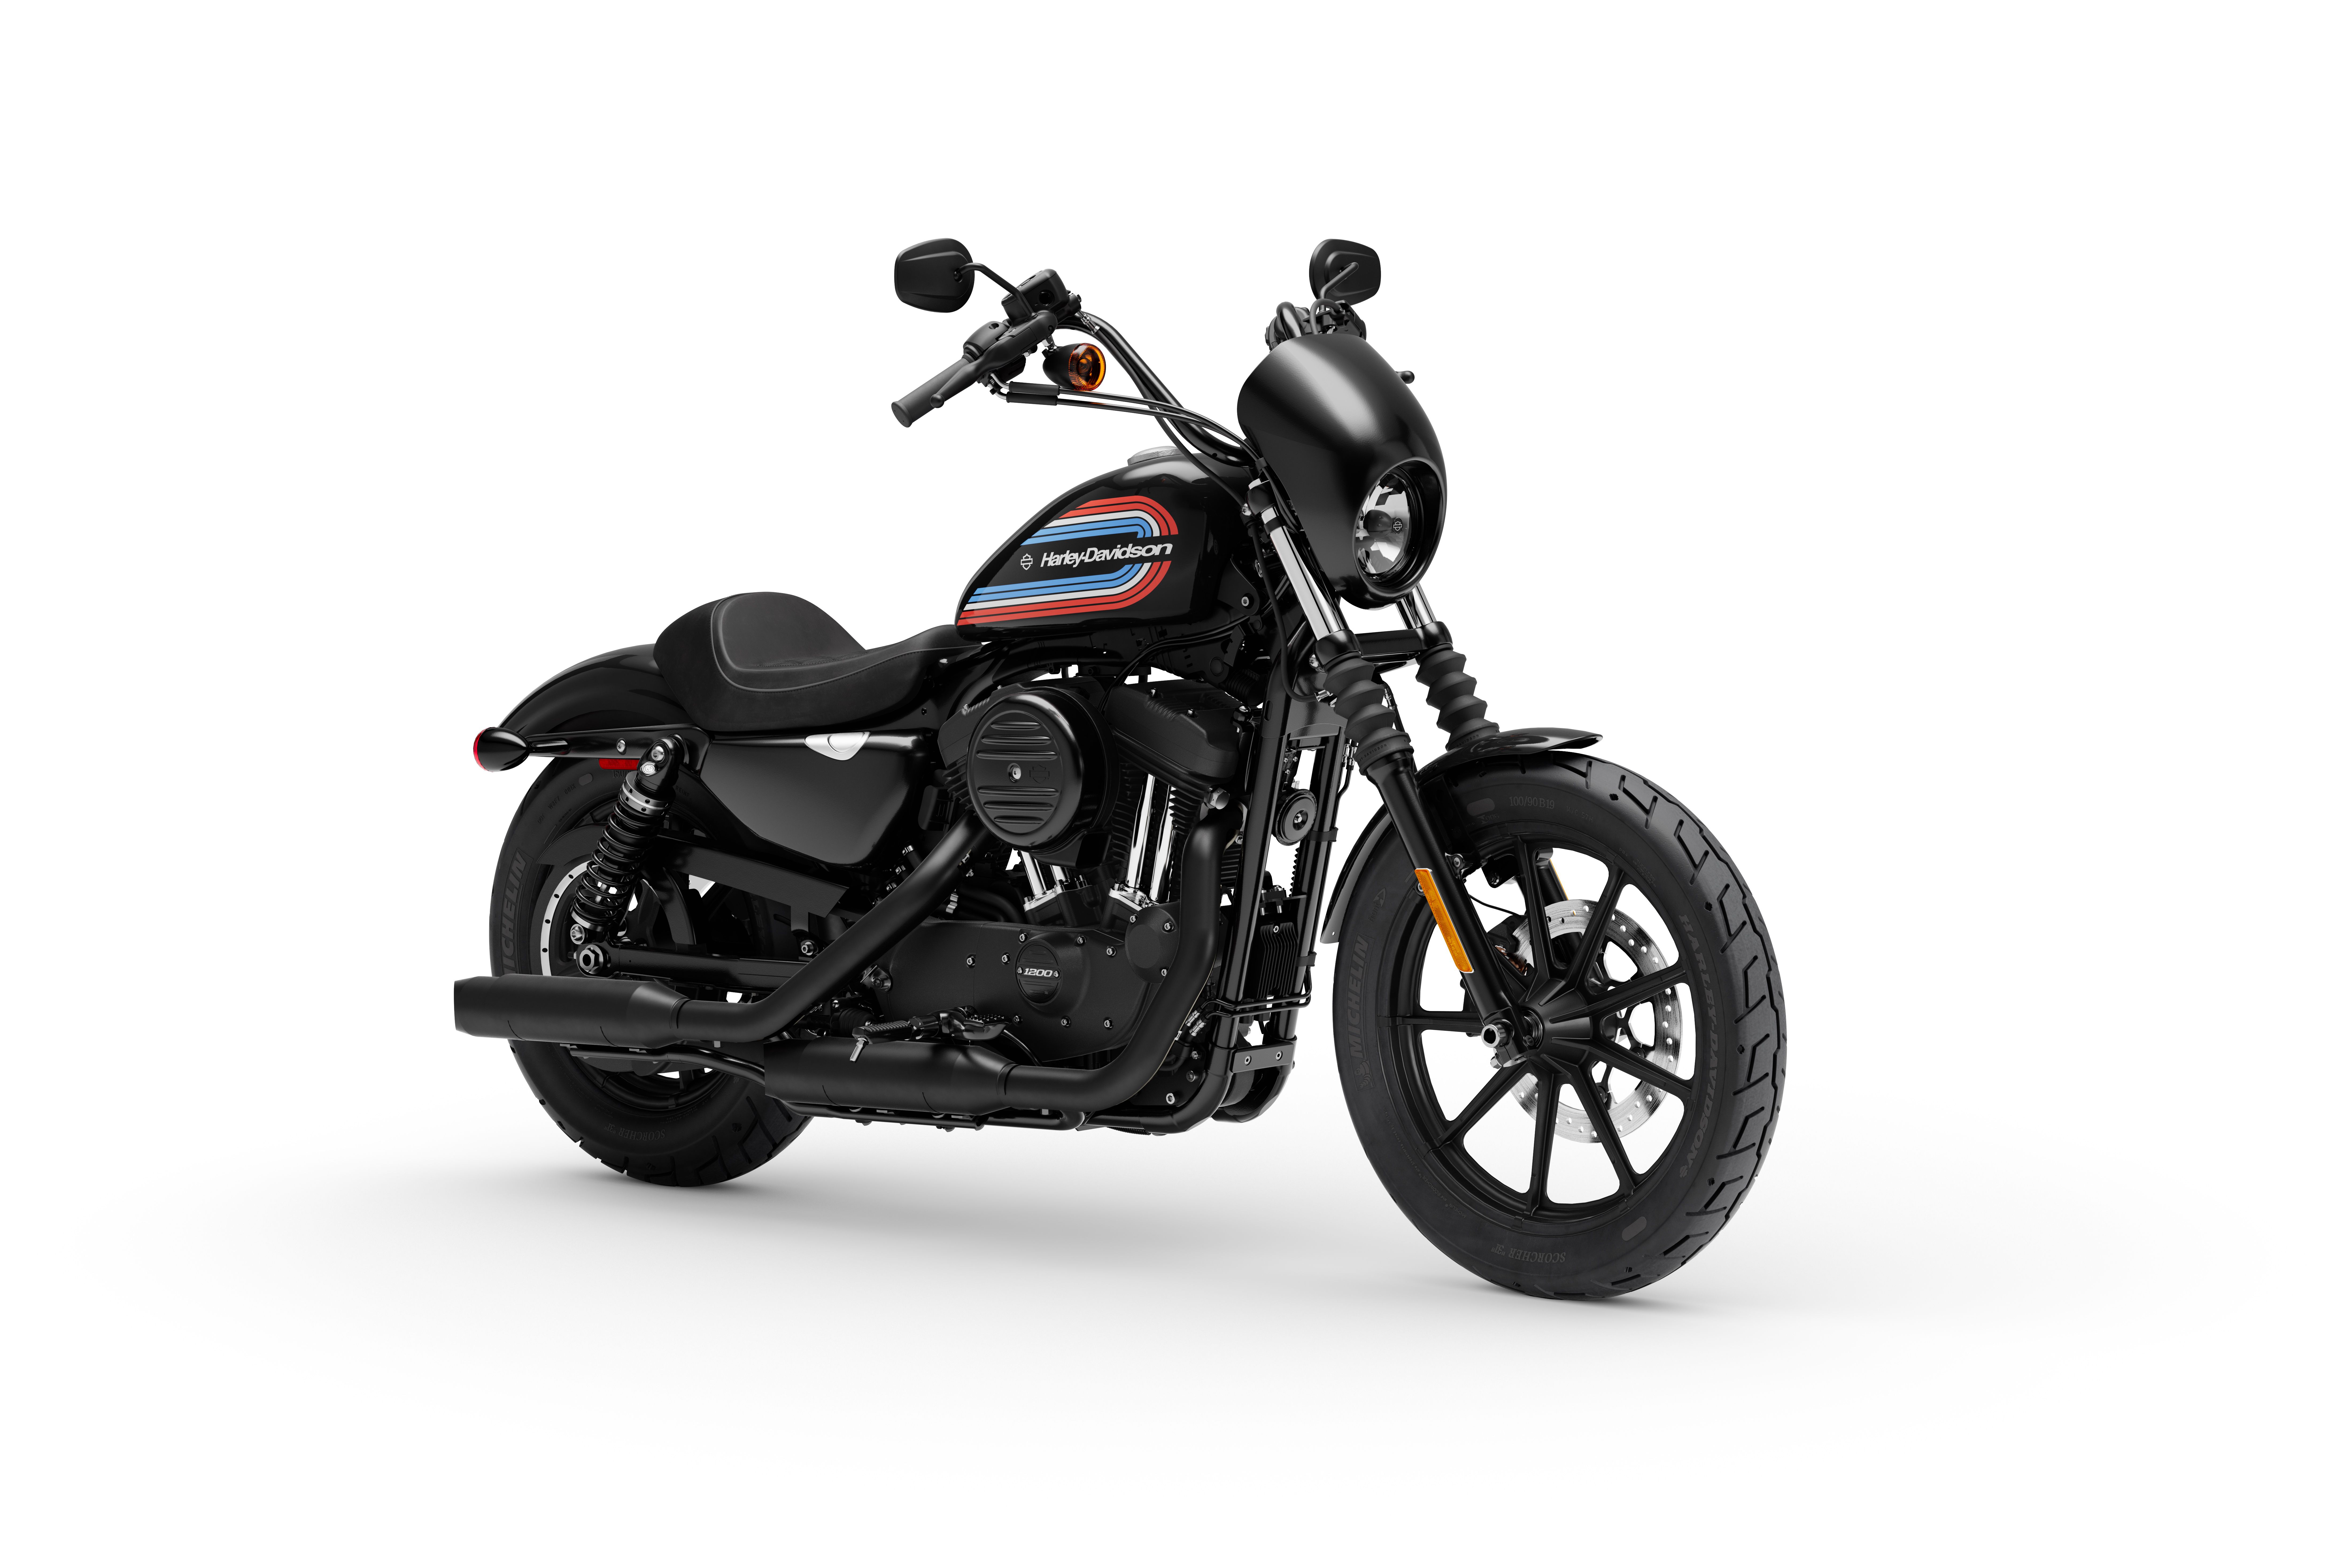 2020 Harley Davidson Sportster Iron 1200 Cycle World